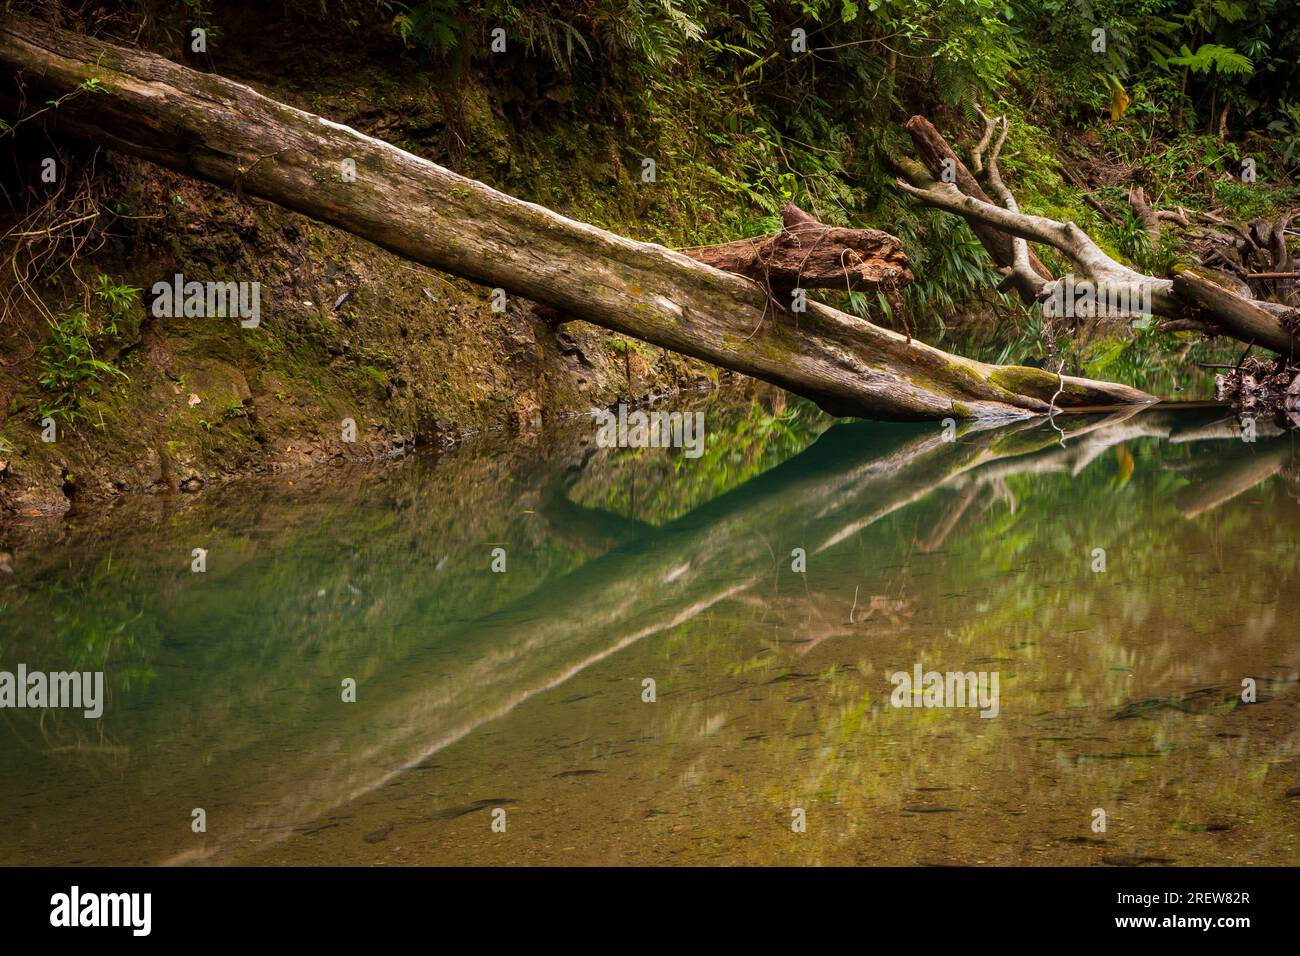 Steinholz und Reflexion in Rio Boqueron, im Regenwald des Portobelo Nationalparks, Provinz Colon, Republik Panama, Mittelamerika. Stockfoto